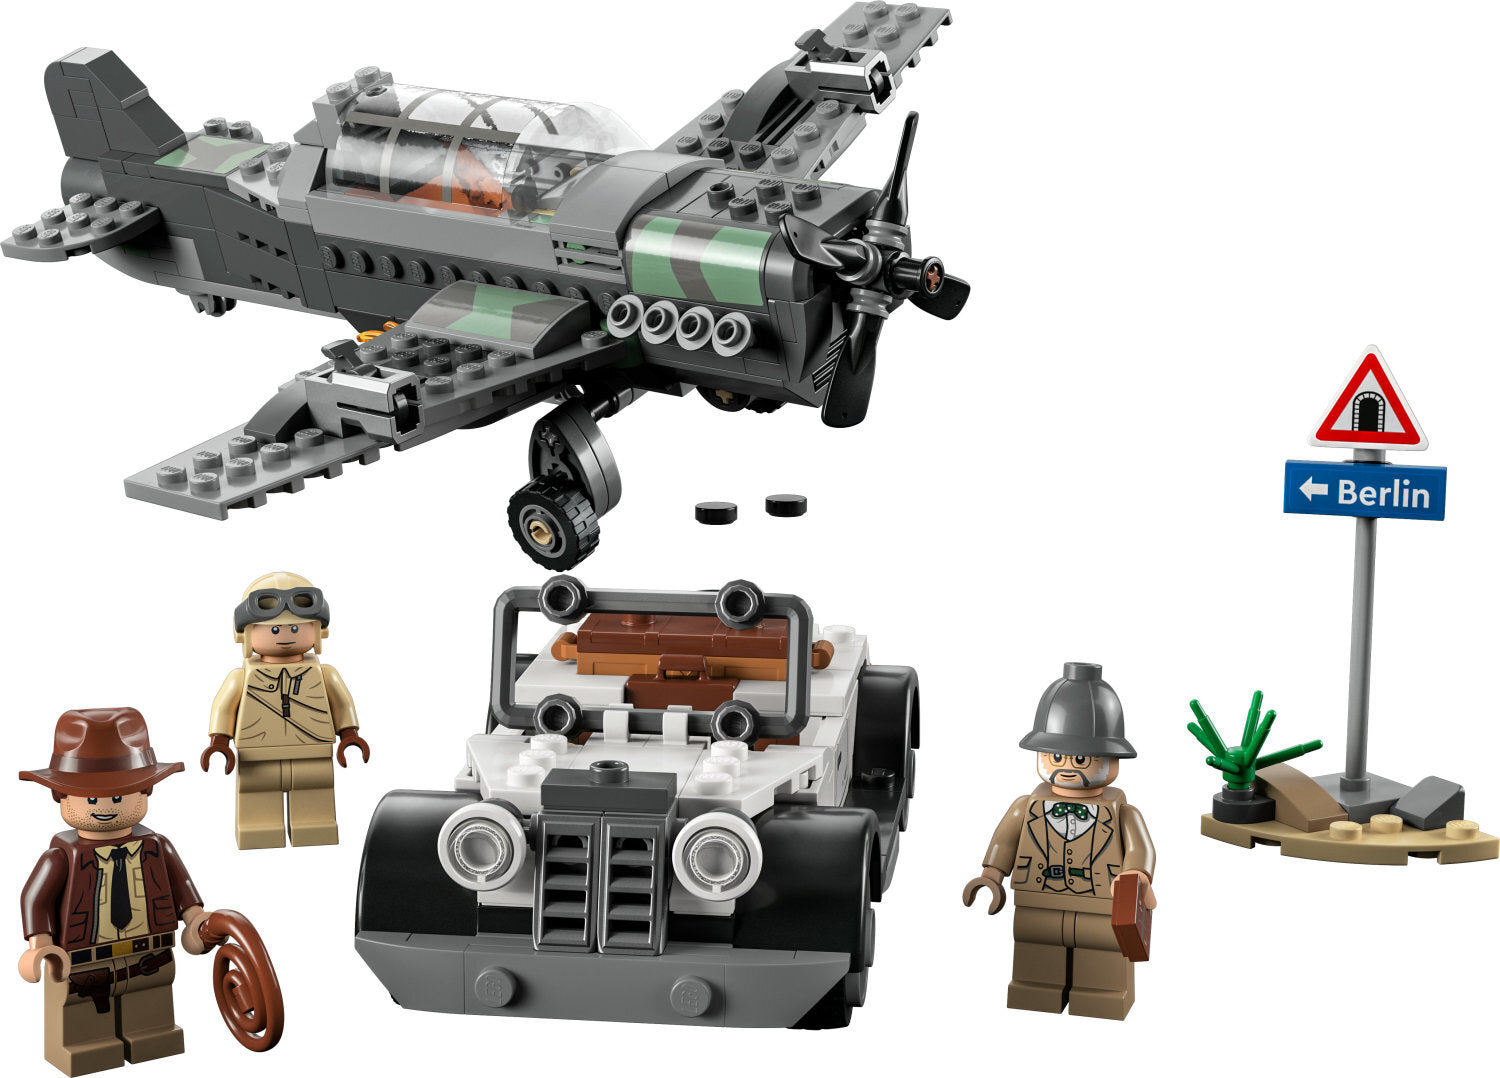 LEGO® Indiana Jones: Fighter Plane Chase